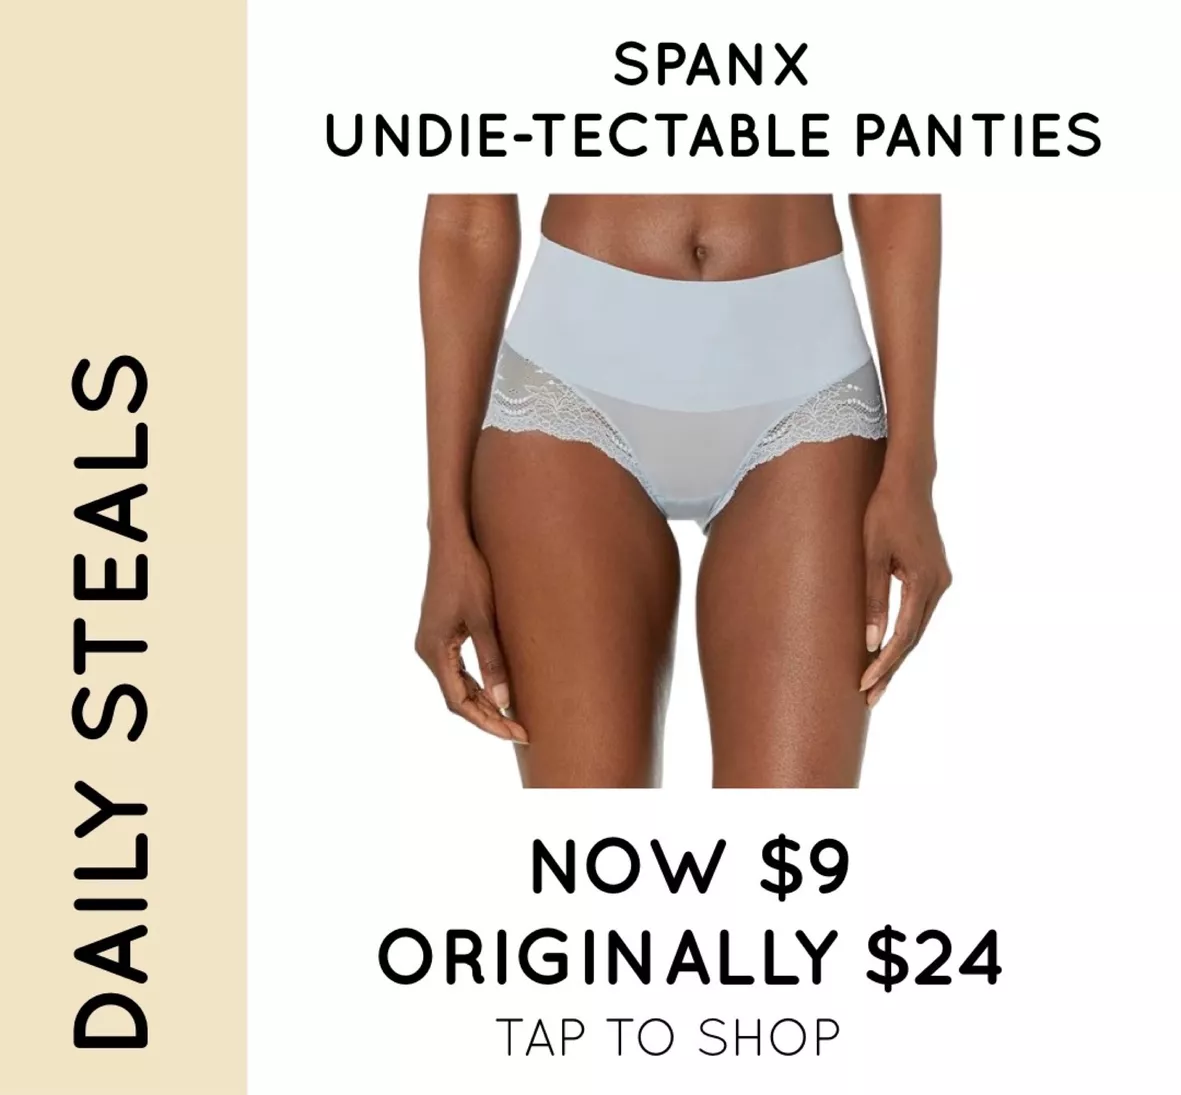 Spanx, Shop Spanx for underwear, shapewear and briefs